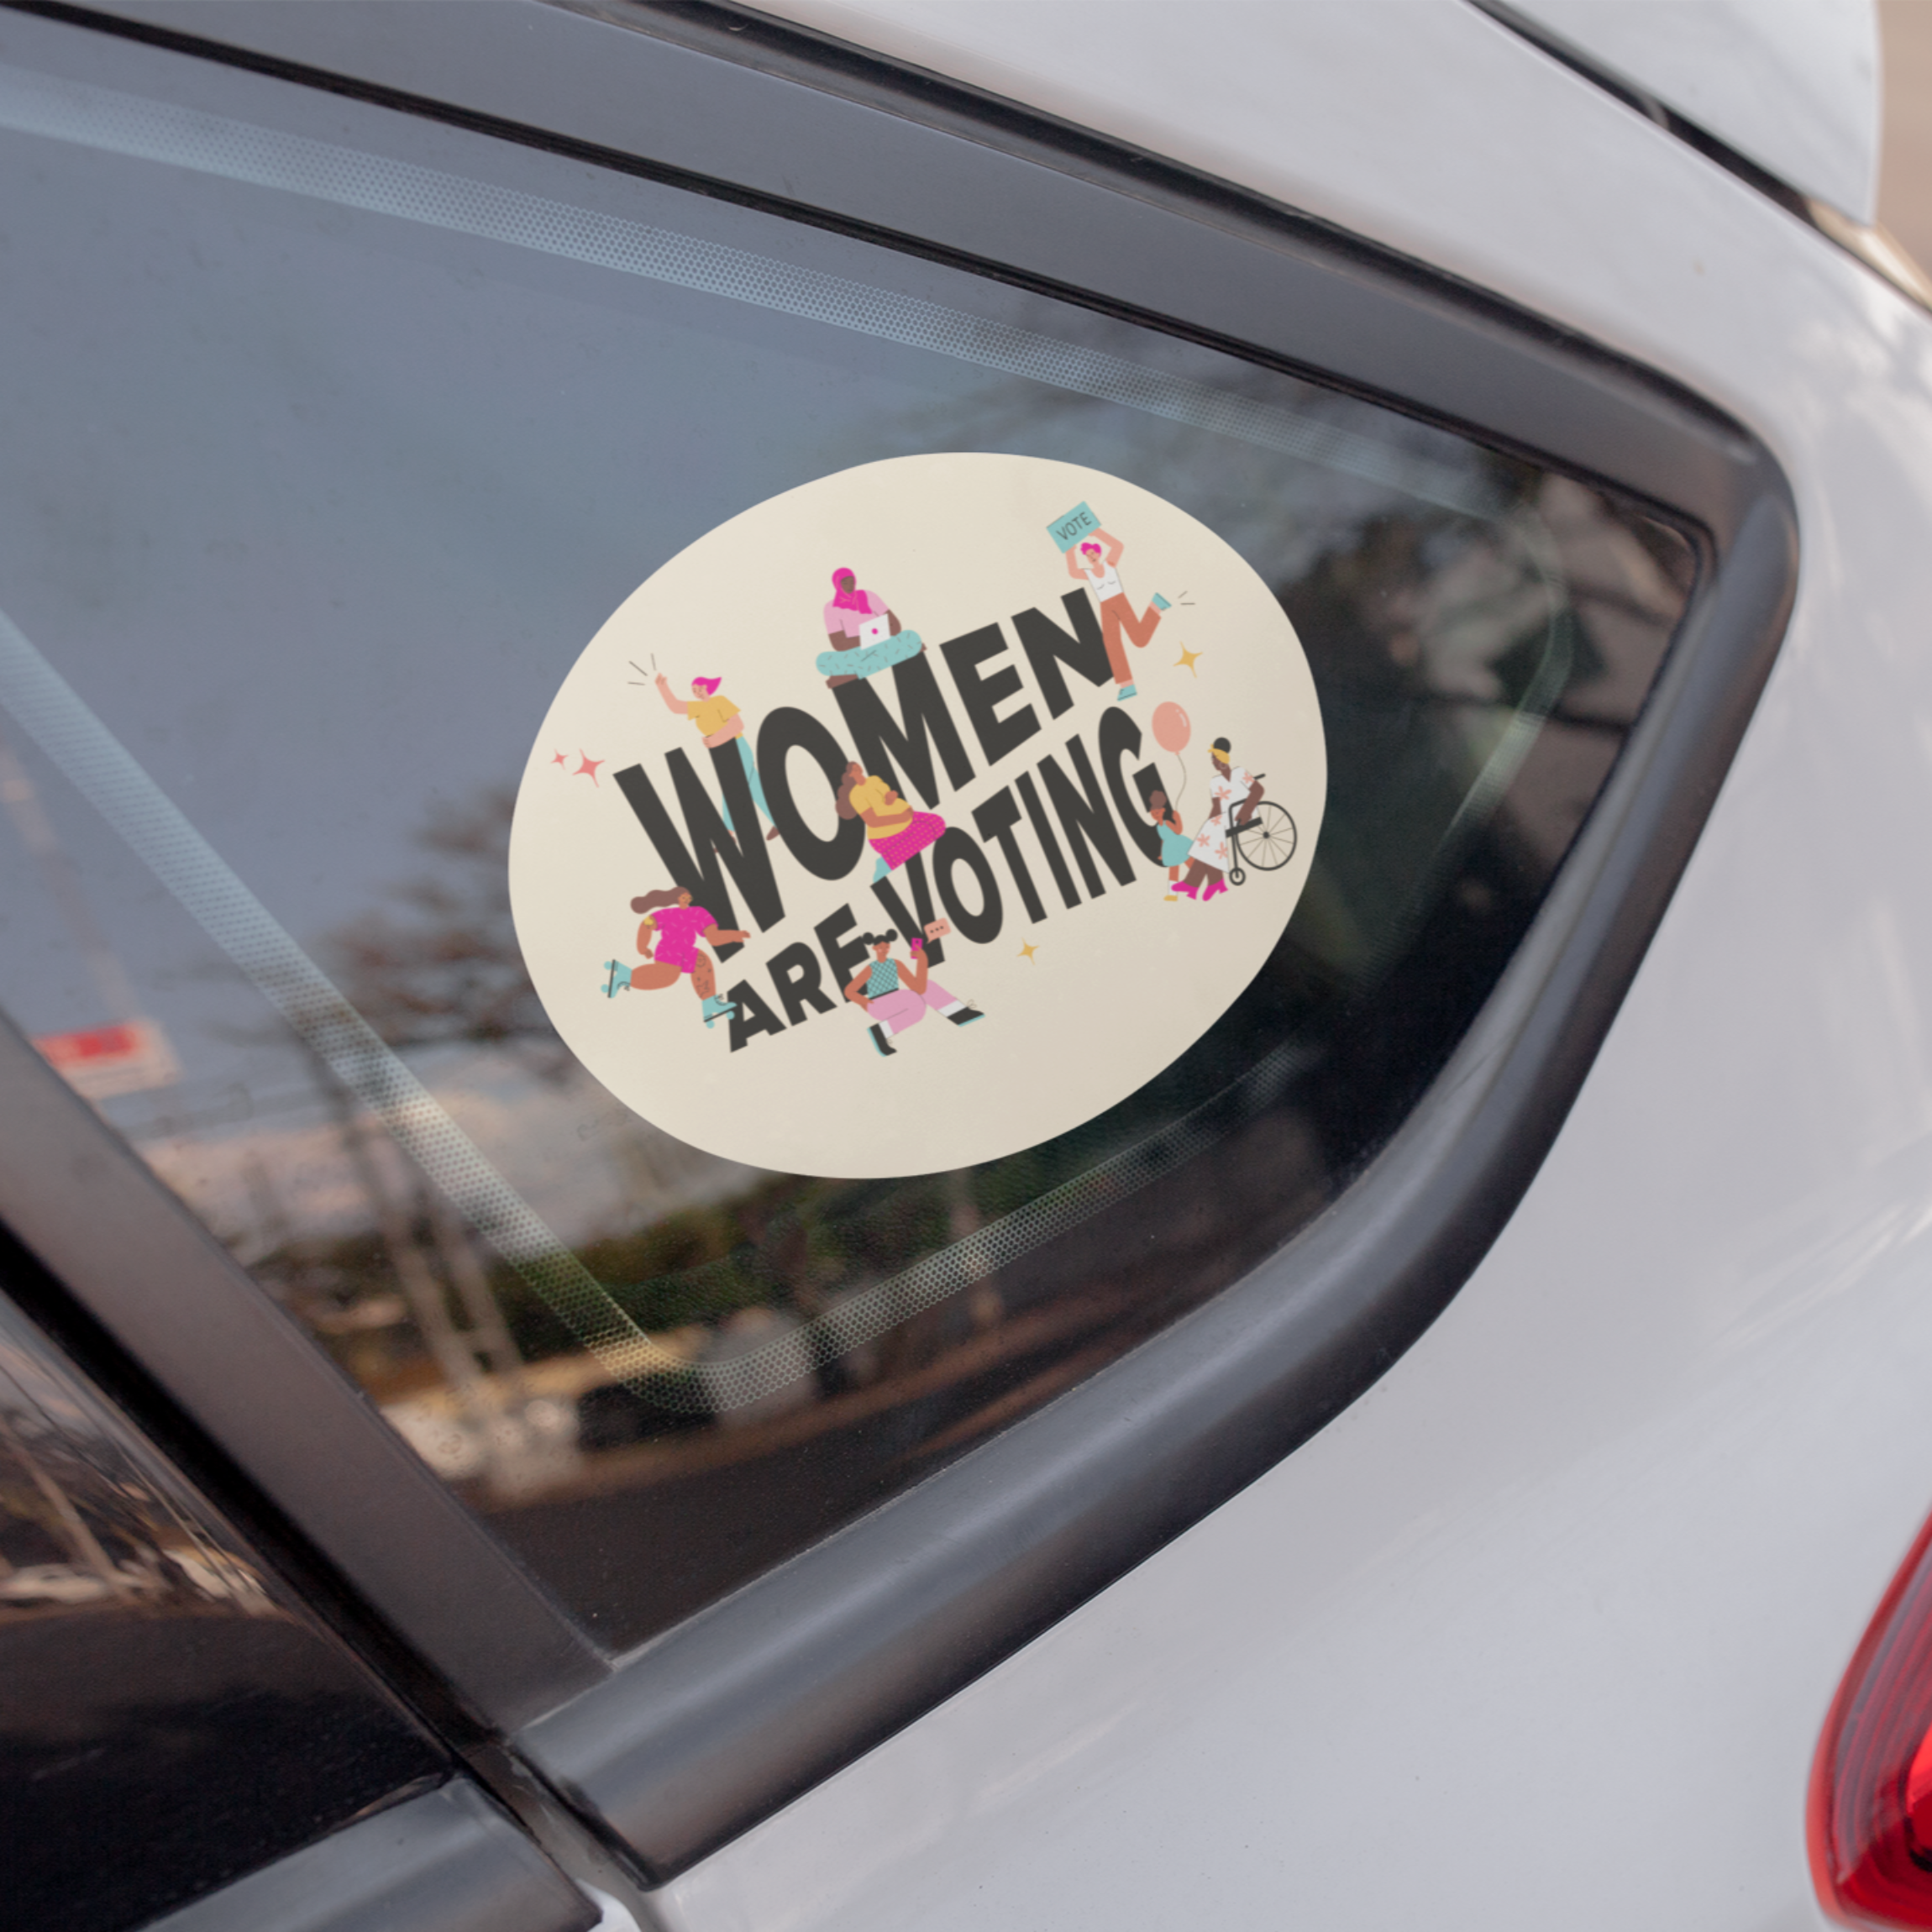 Women Are Voting Car Sticker